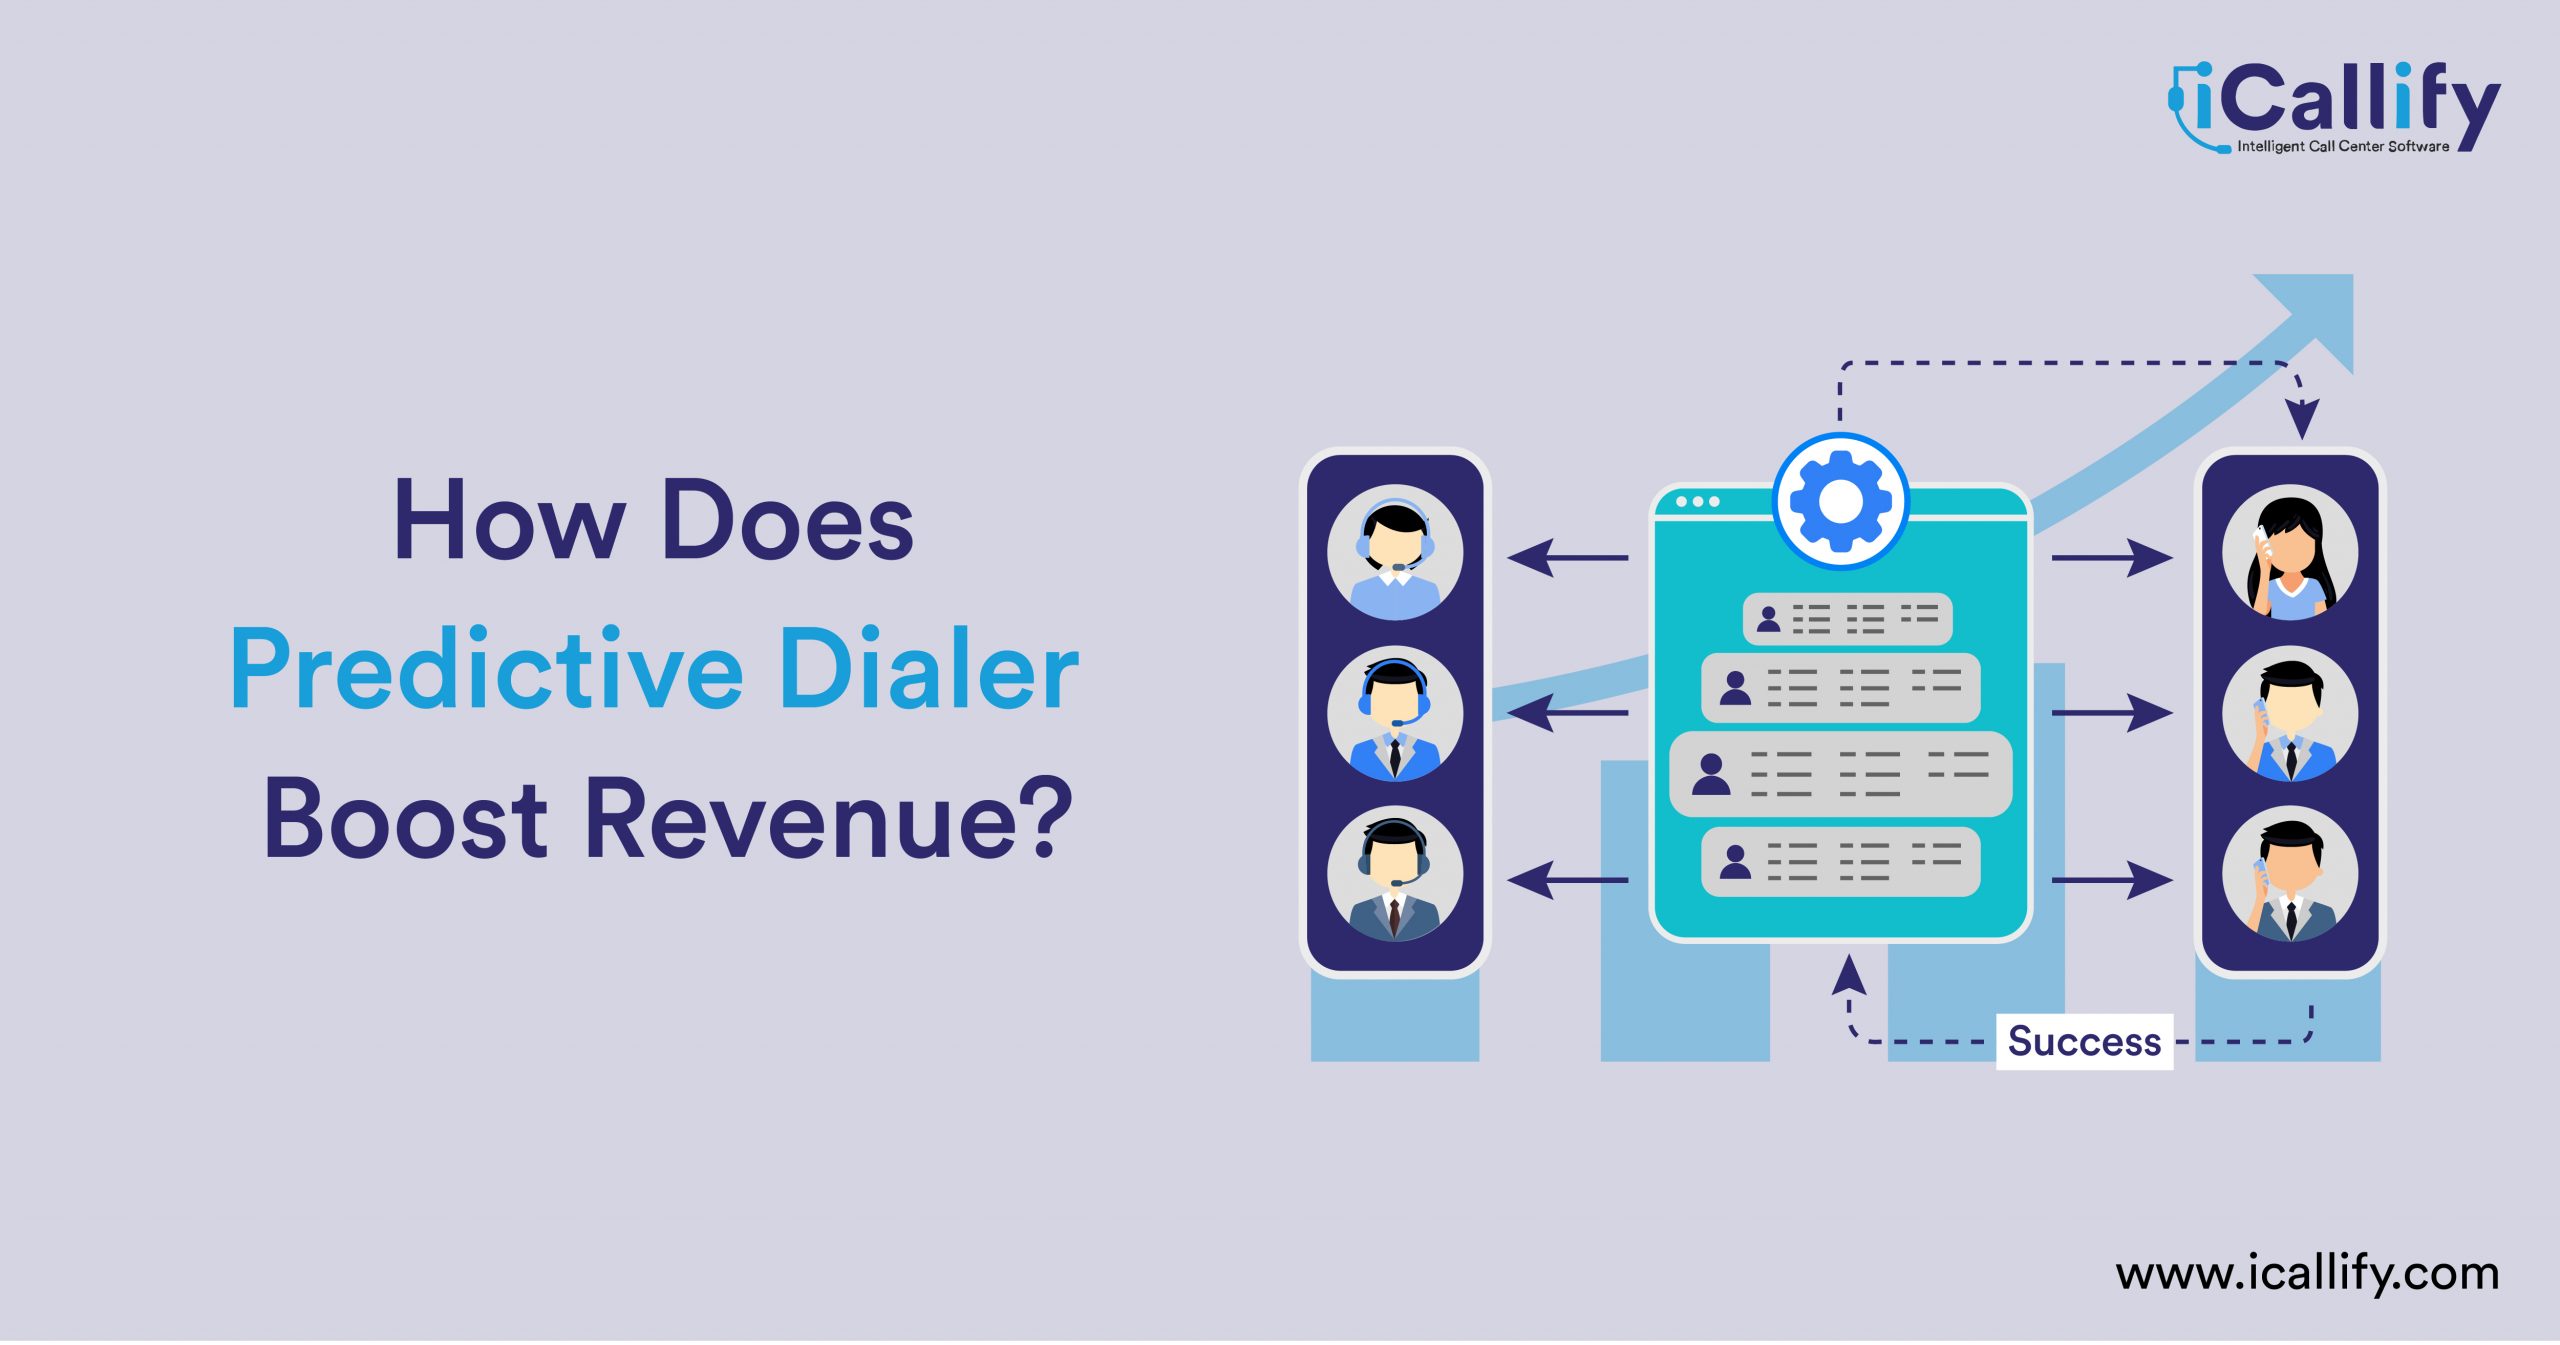 How Does Predictive Dialer Boost Revenue?